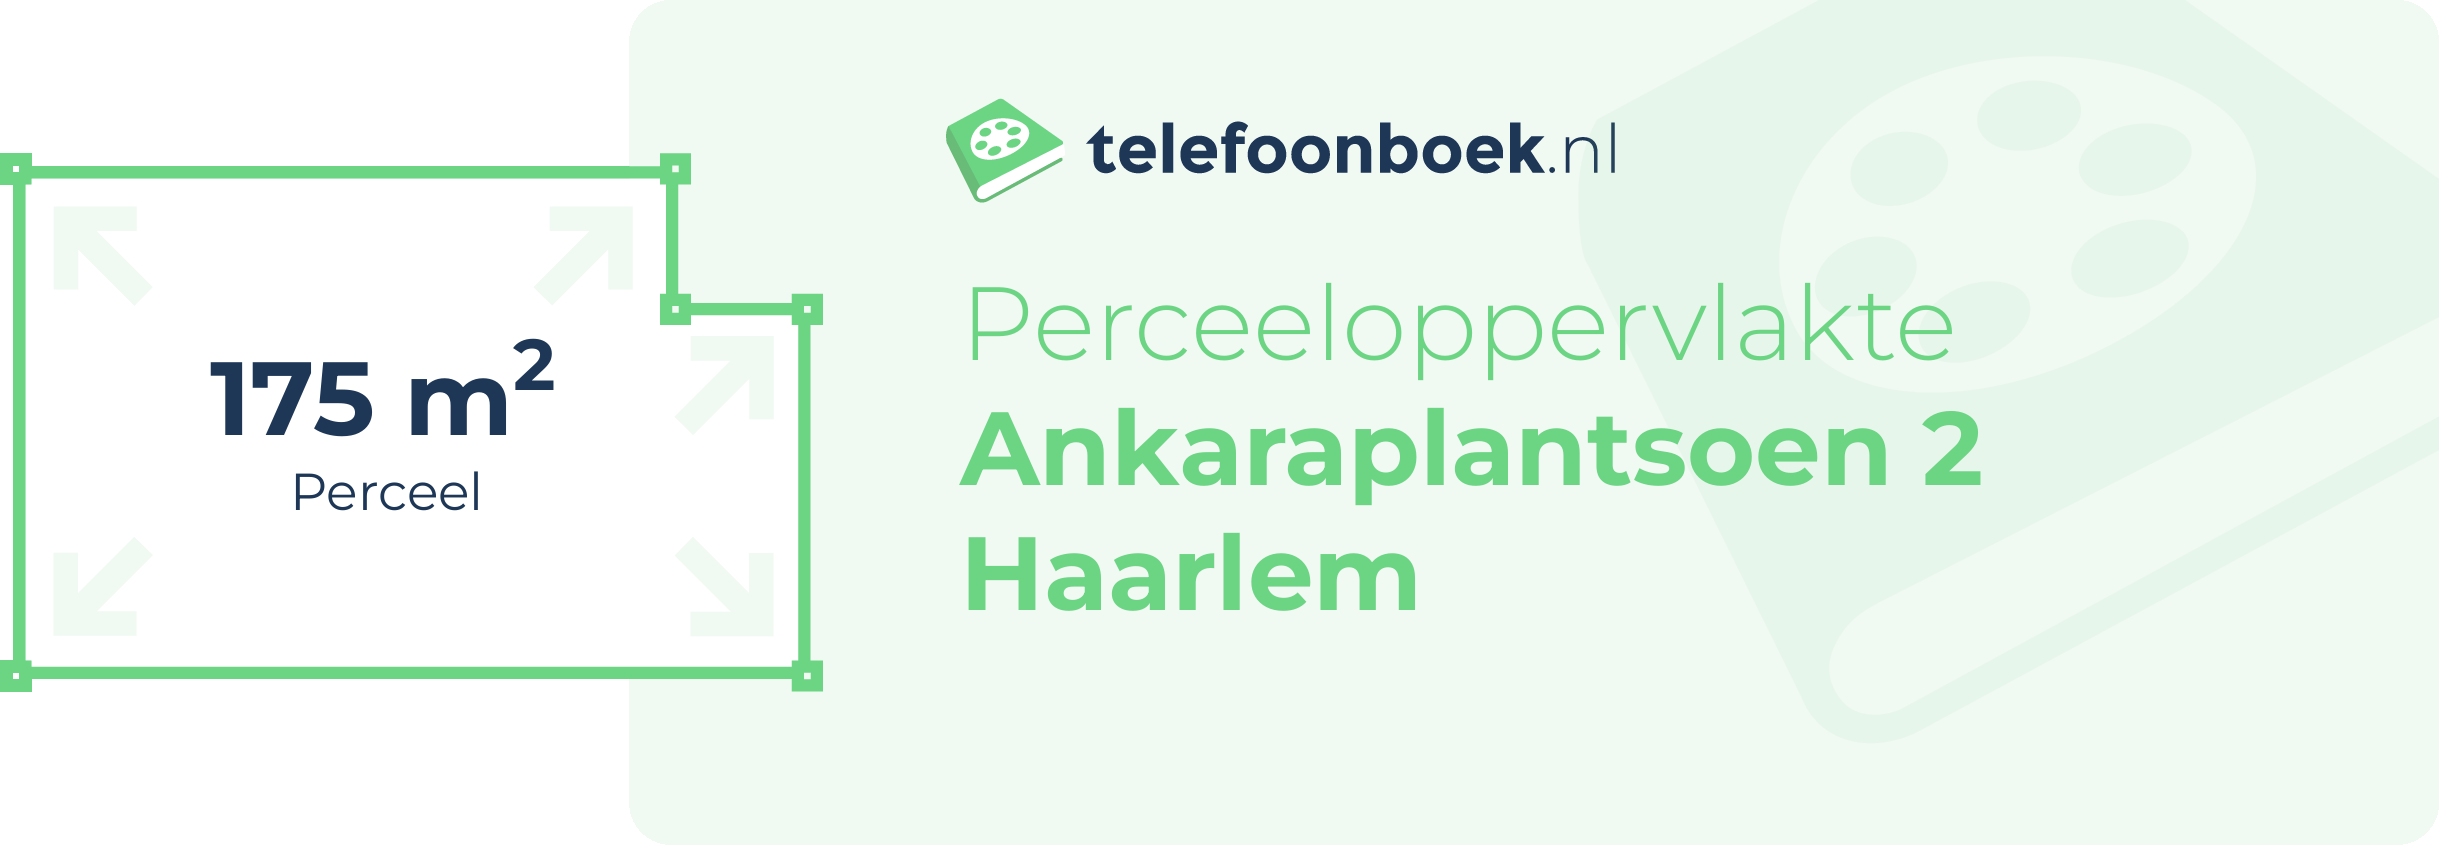 Perceeloppervlakte Ankaraplantsoen 2 Haarlem